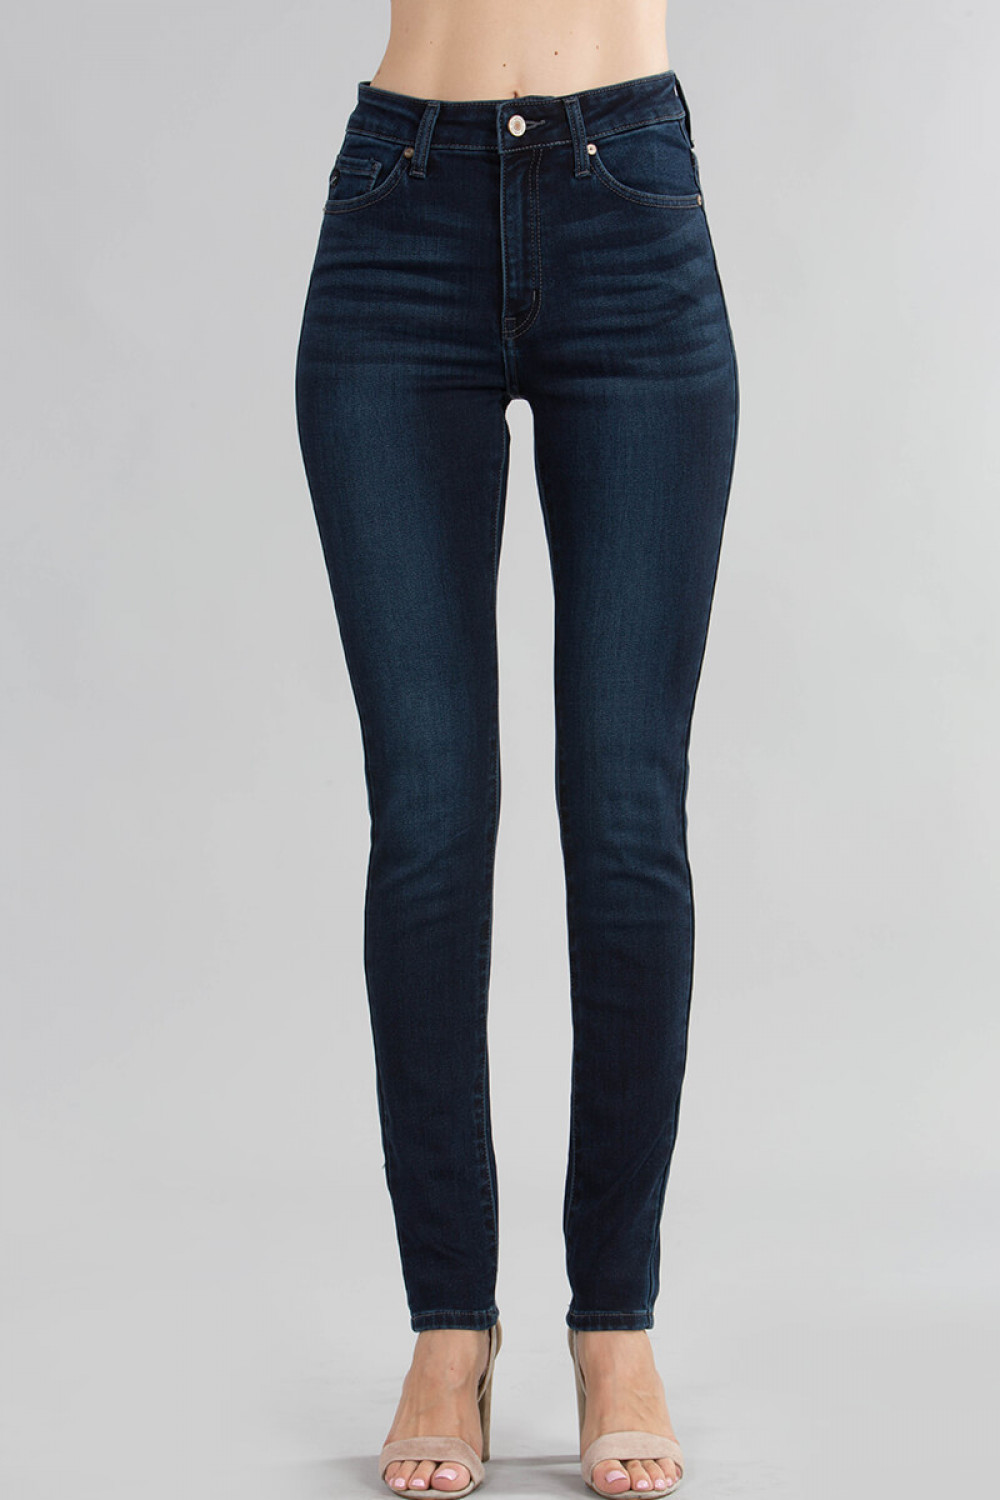 Kancan Wool Lined Skinny Jean